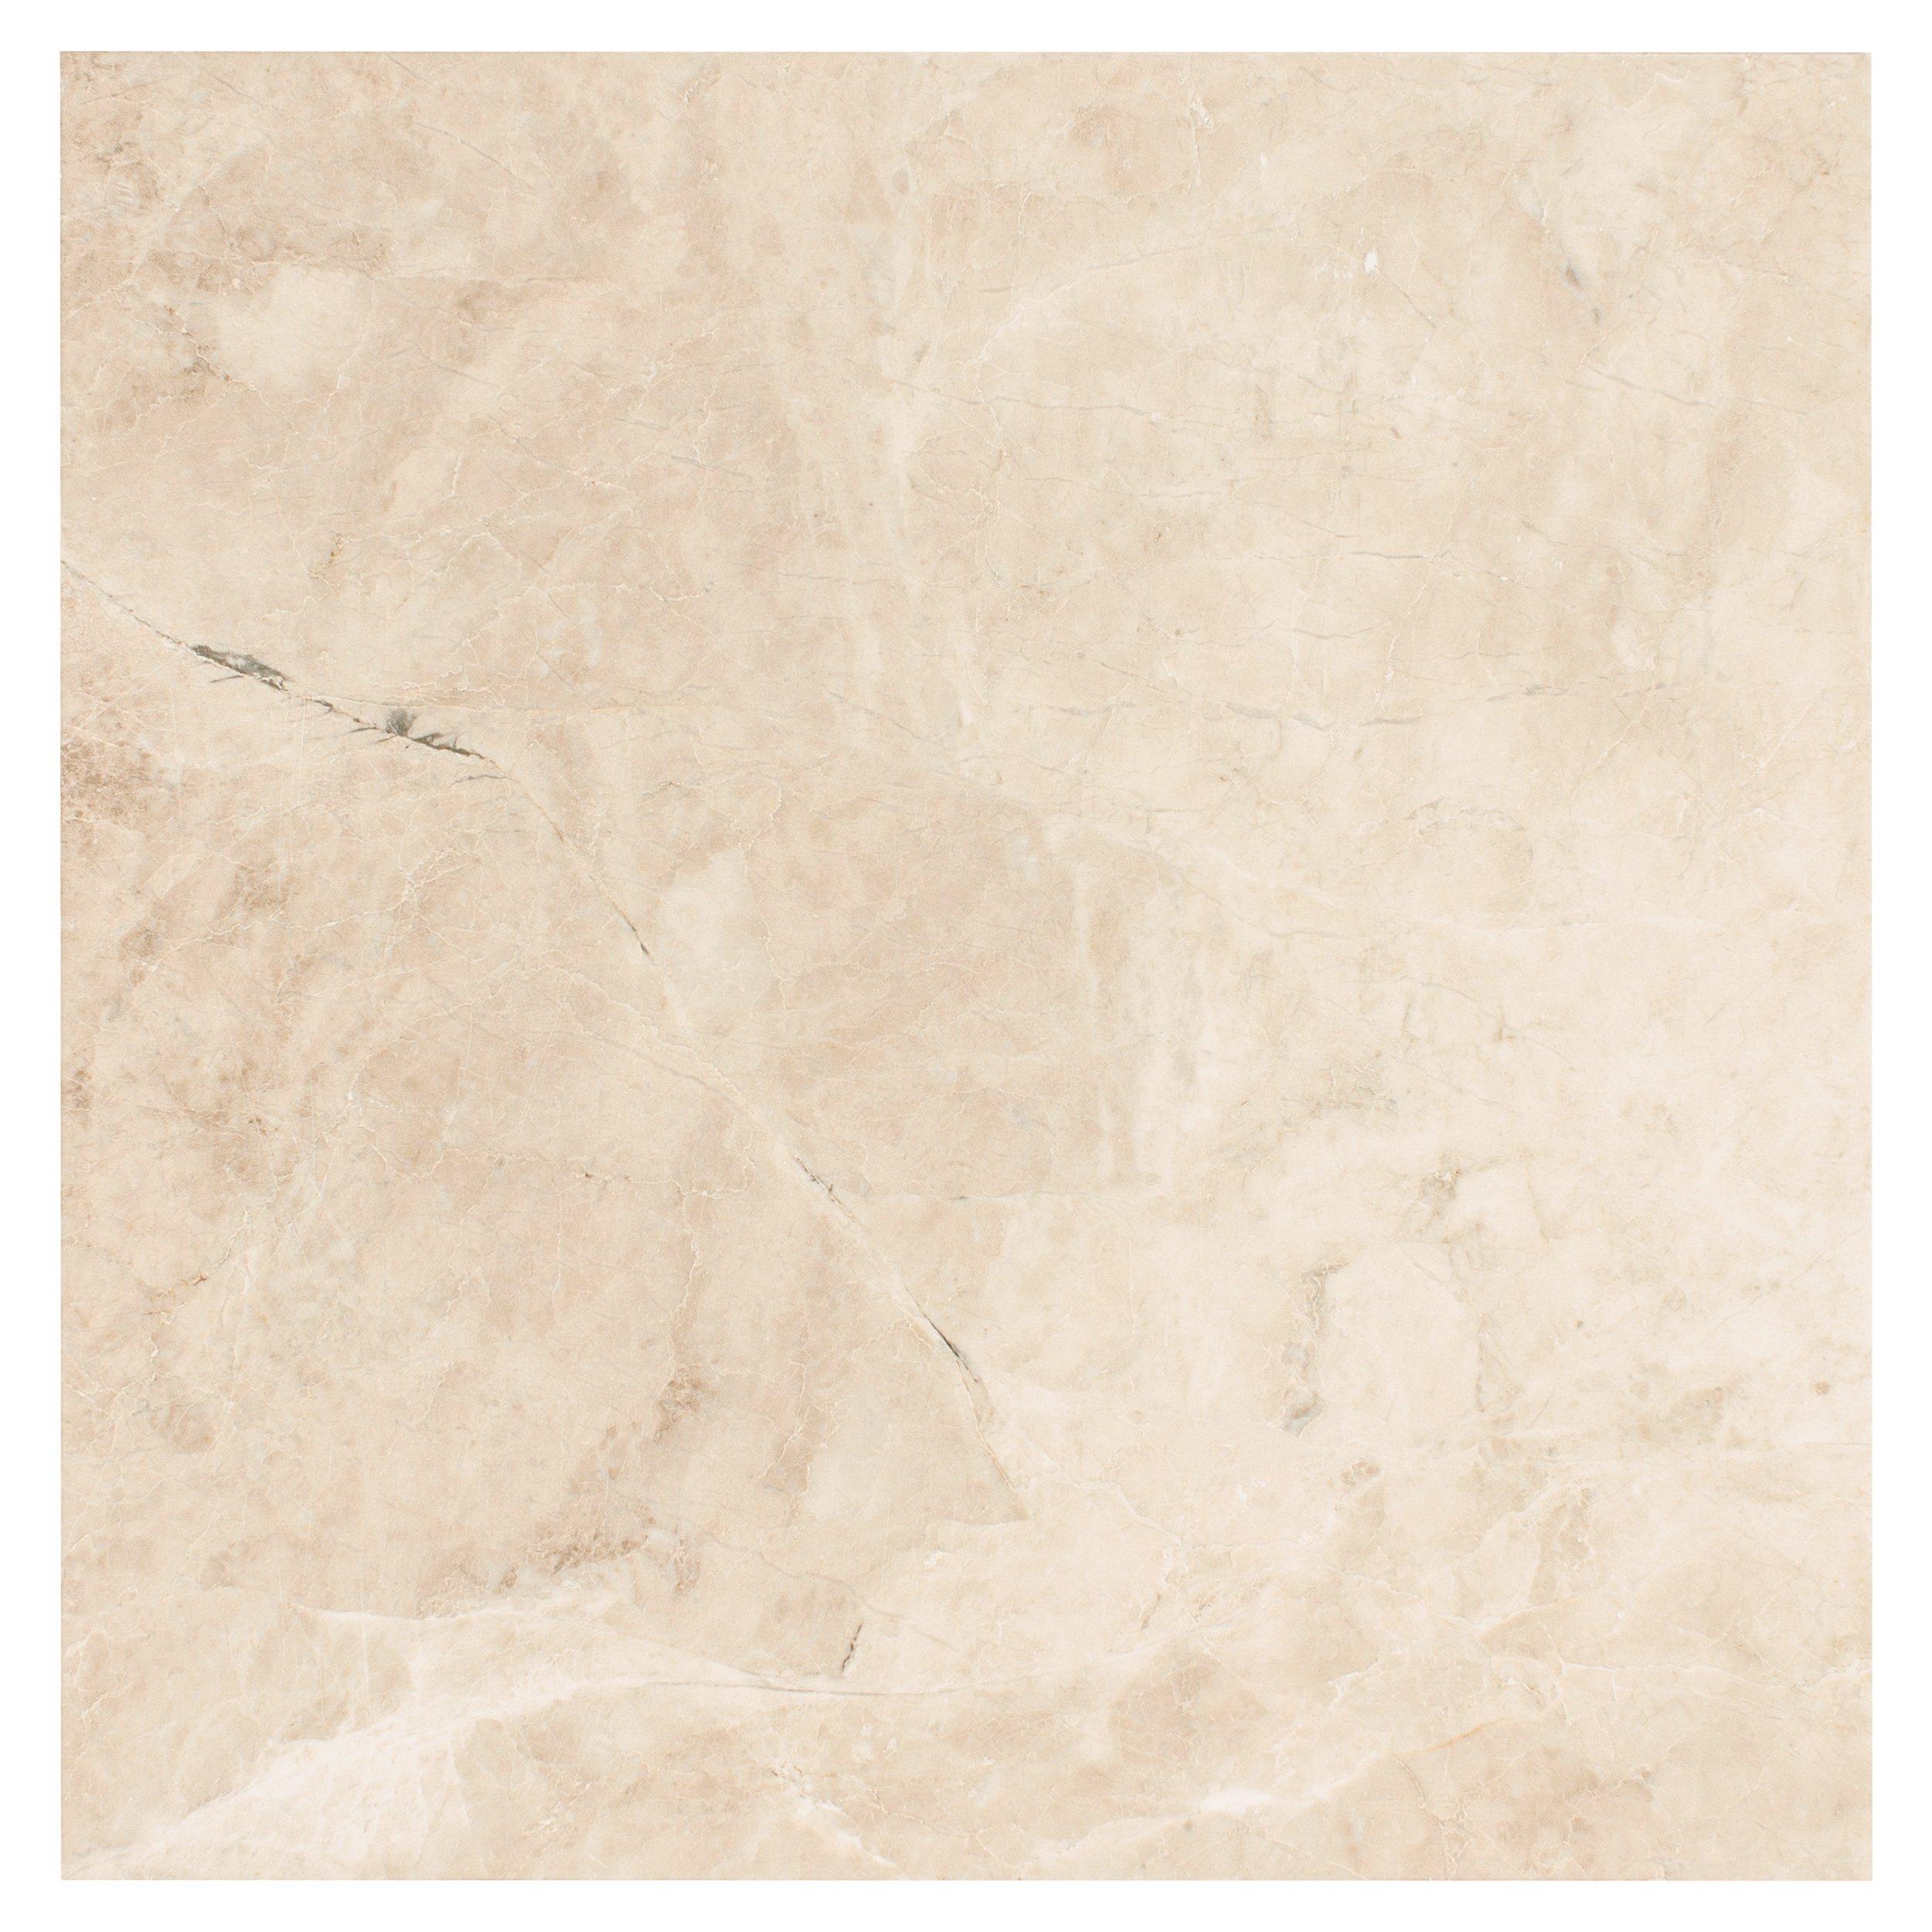 Tuscany Cream Polished Marble Tile - 12 x 24 - 100136639 | Floor and Decor